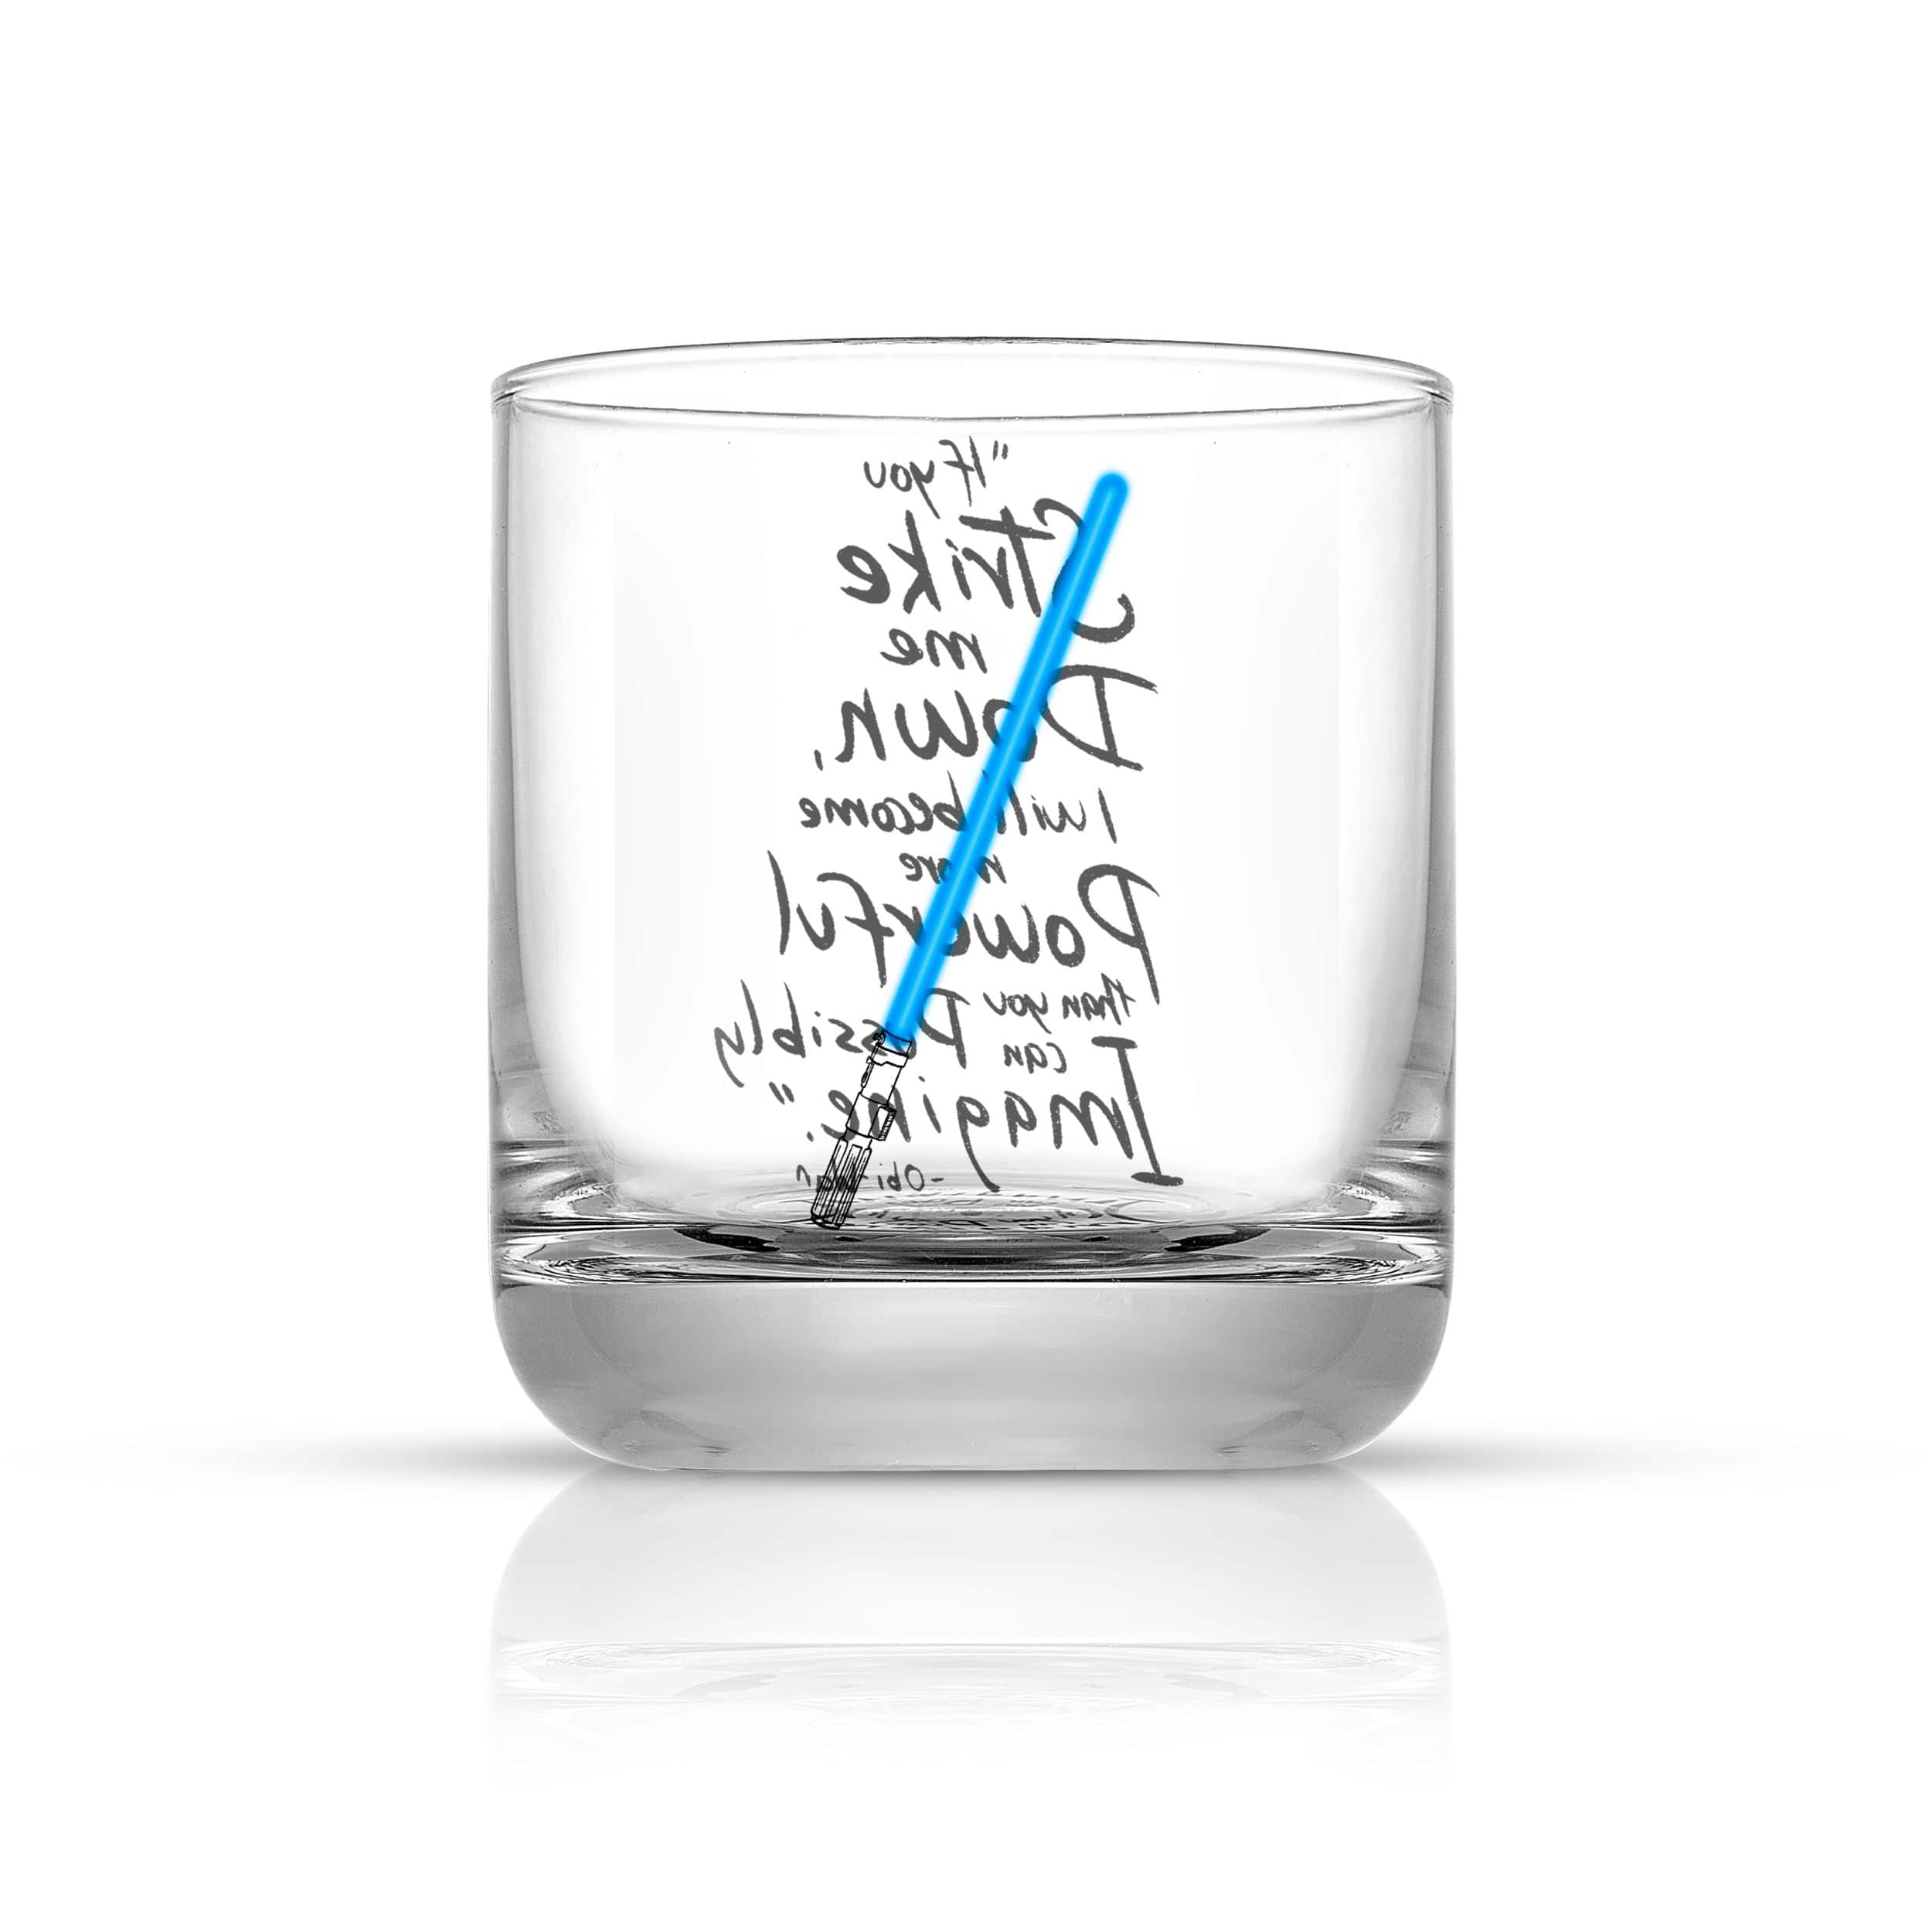 JoyJolt&#xAE; Star Wars&#x2122; 10oz. New Hope Obi-Wan Kenobi Blue Lightsaber Short Drinking Glass, 2ct.